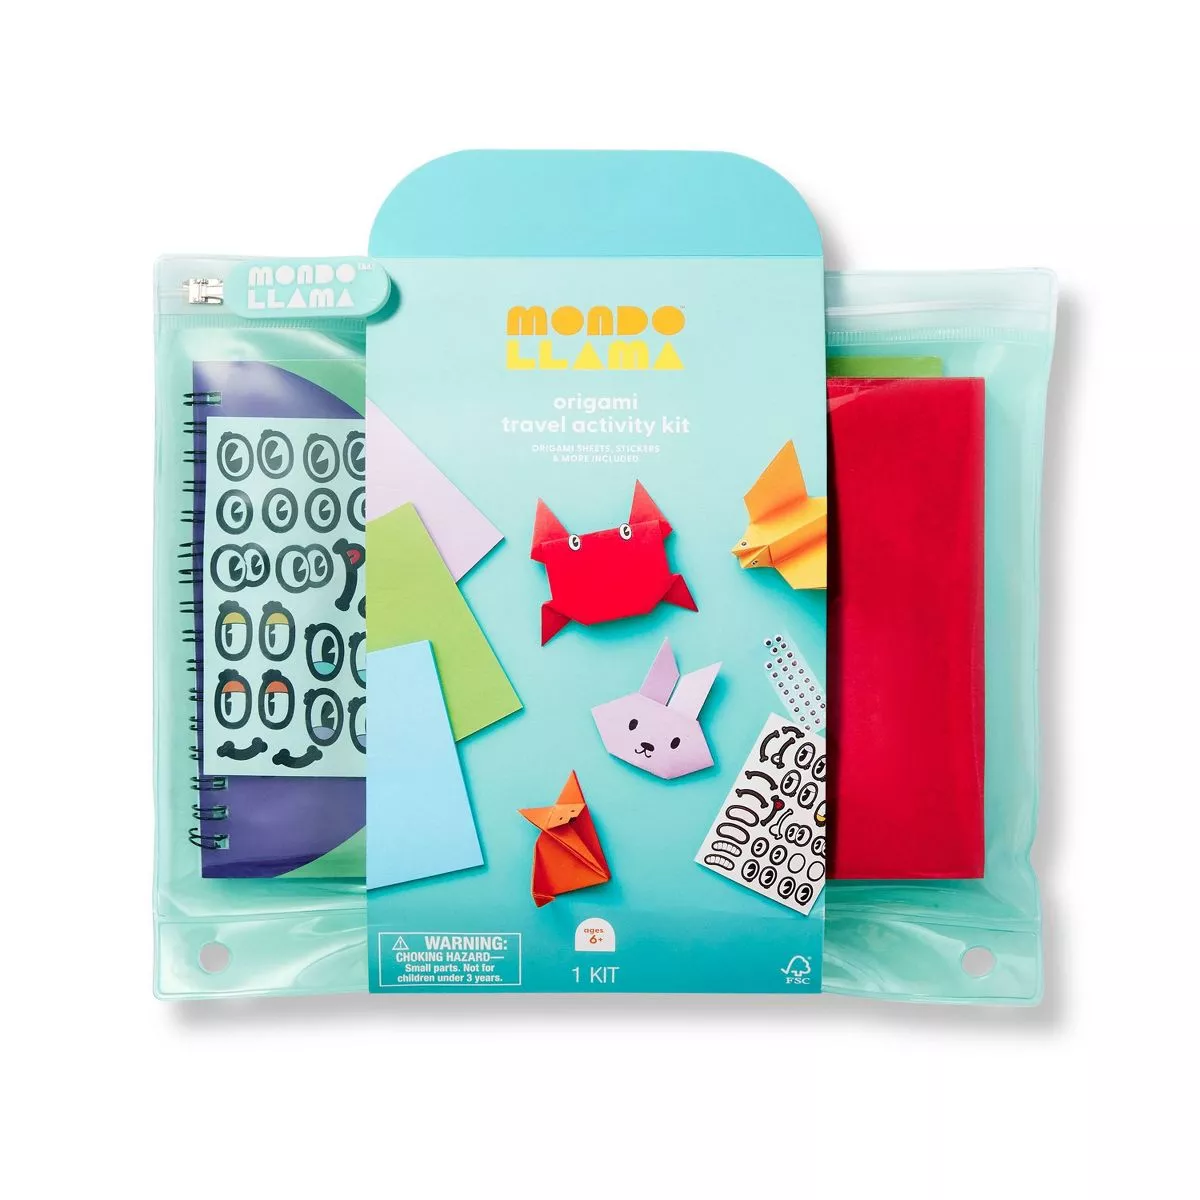 Origami Kit : Target